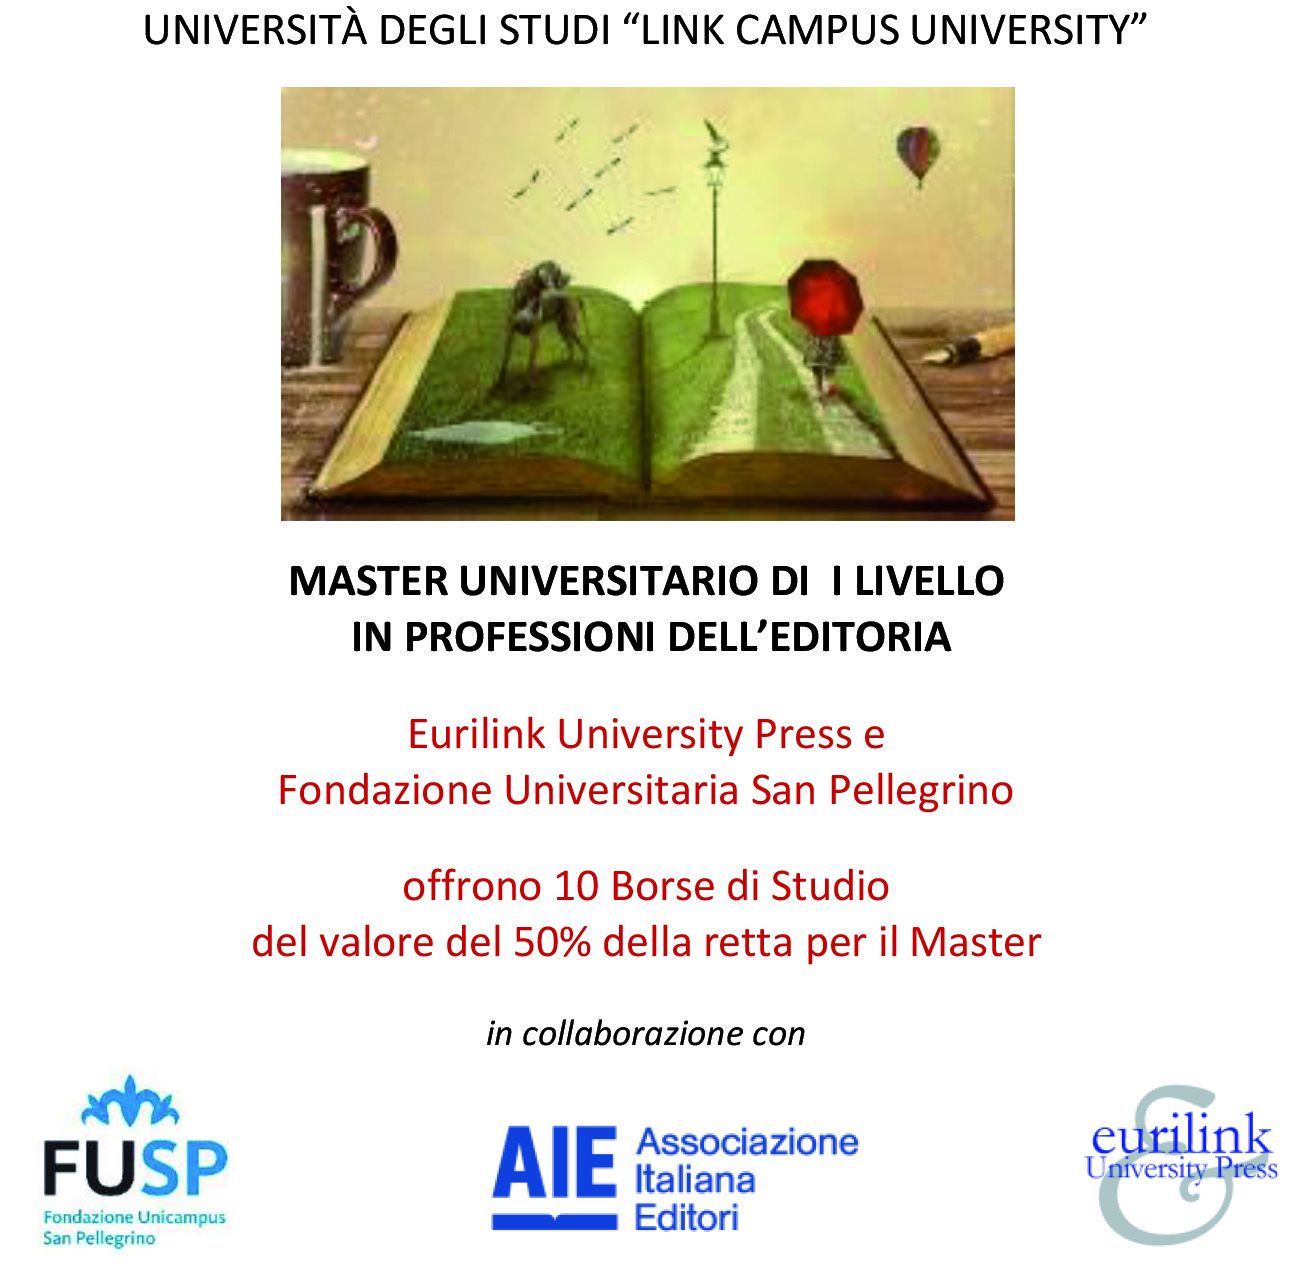 Eurilink University Press